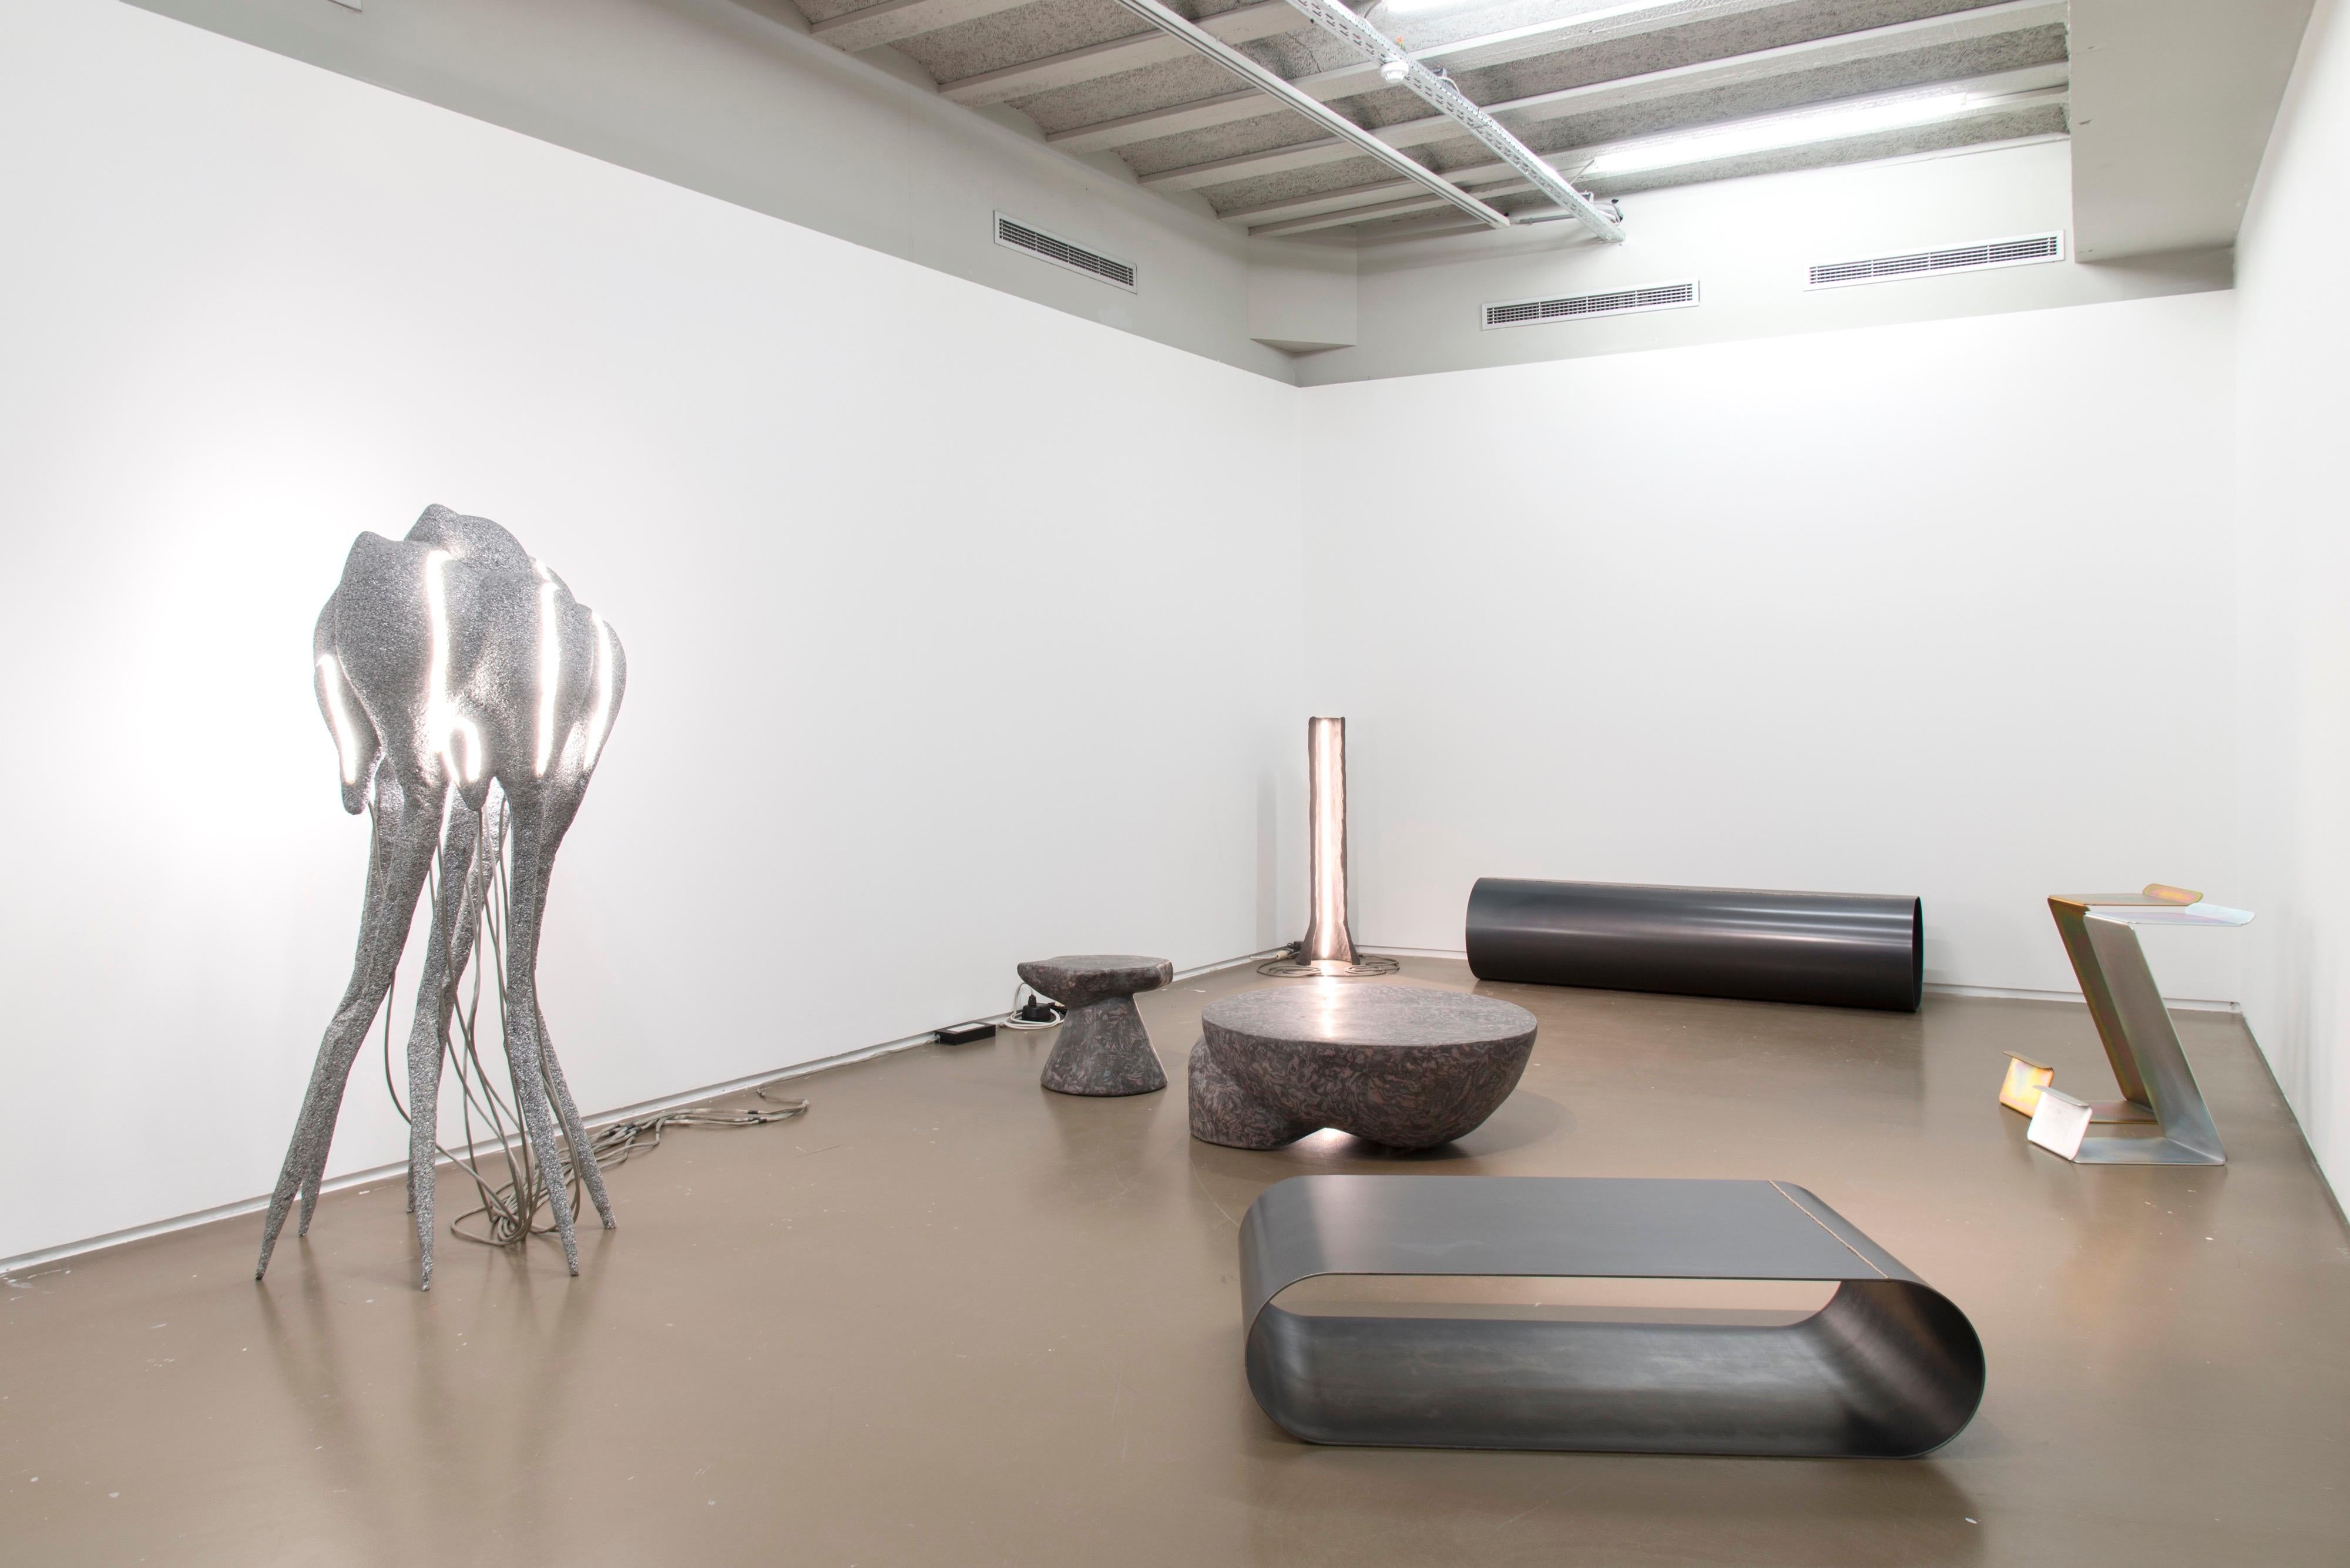 Appliqué New Primitives Floor Lamp in Aluminum Post-Digital Sculptural Design by Mtharu For Sale